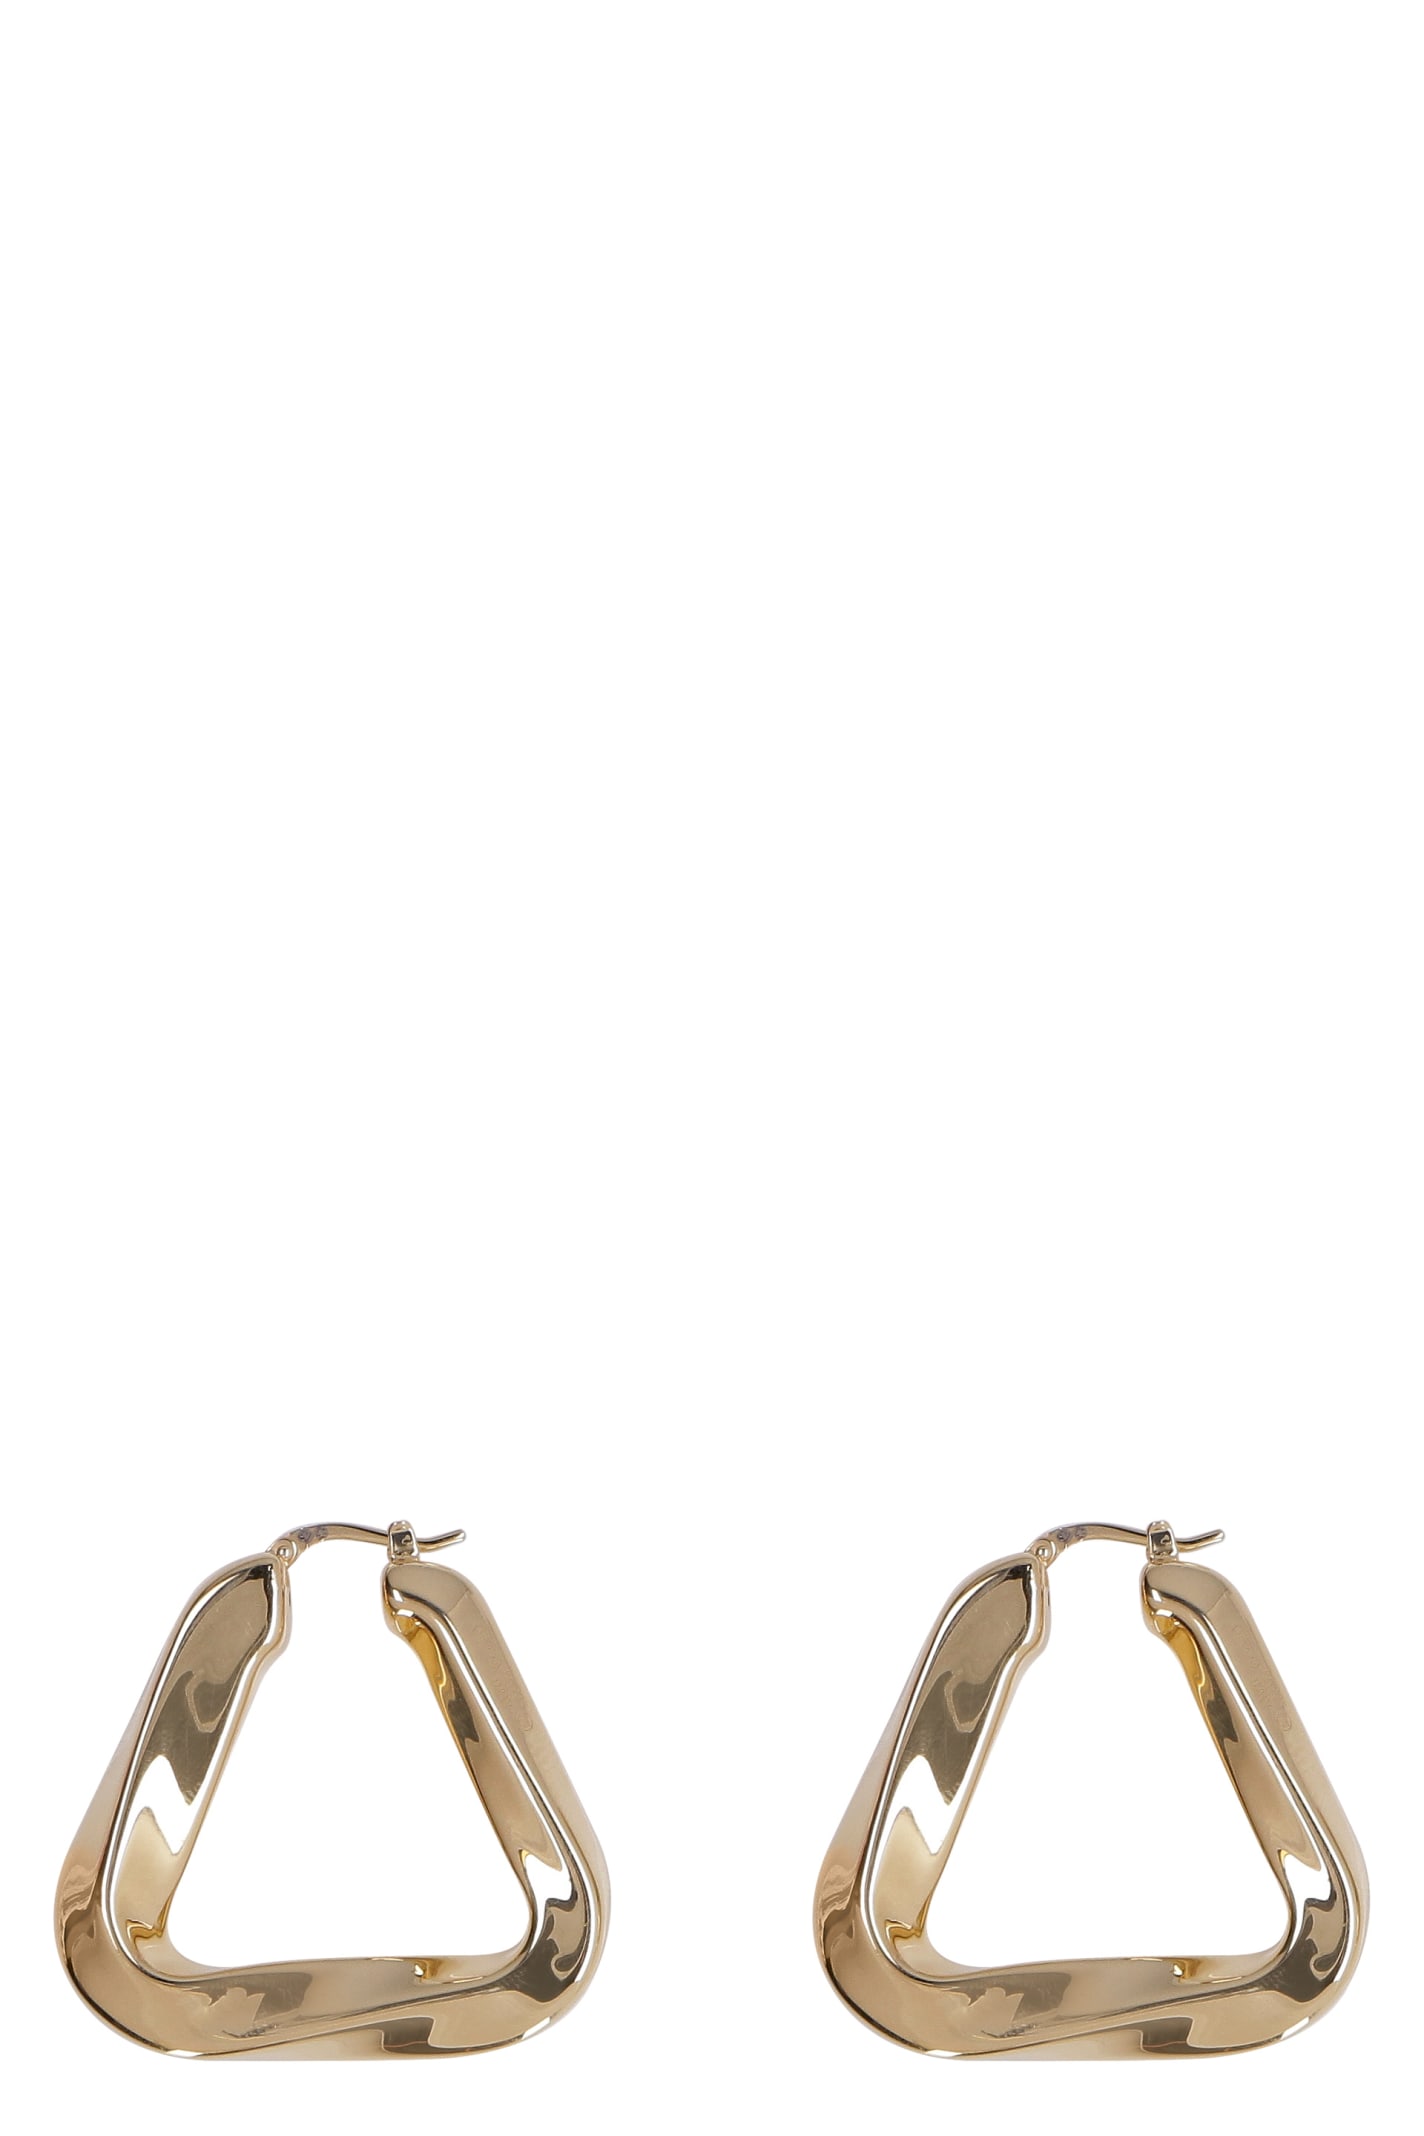 Bottega Veneta Triangle Earrings